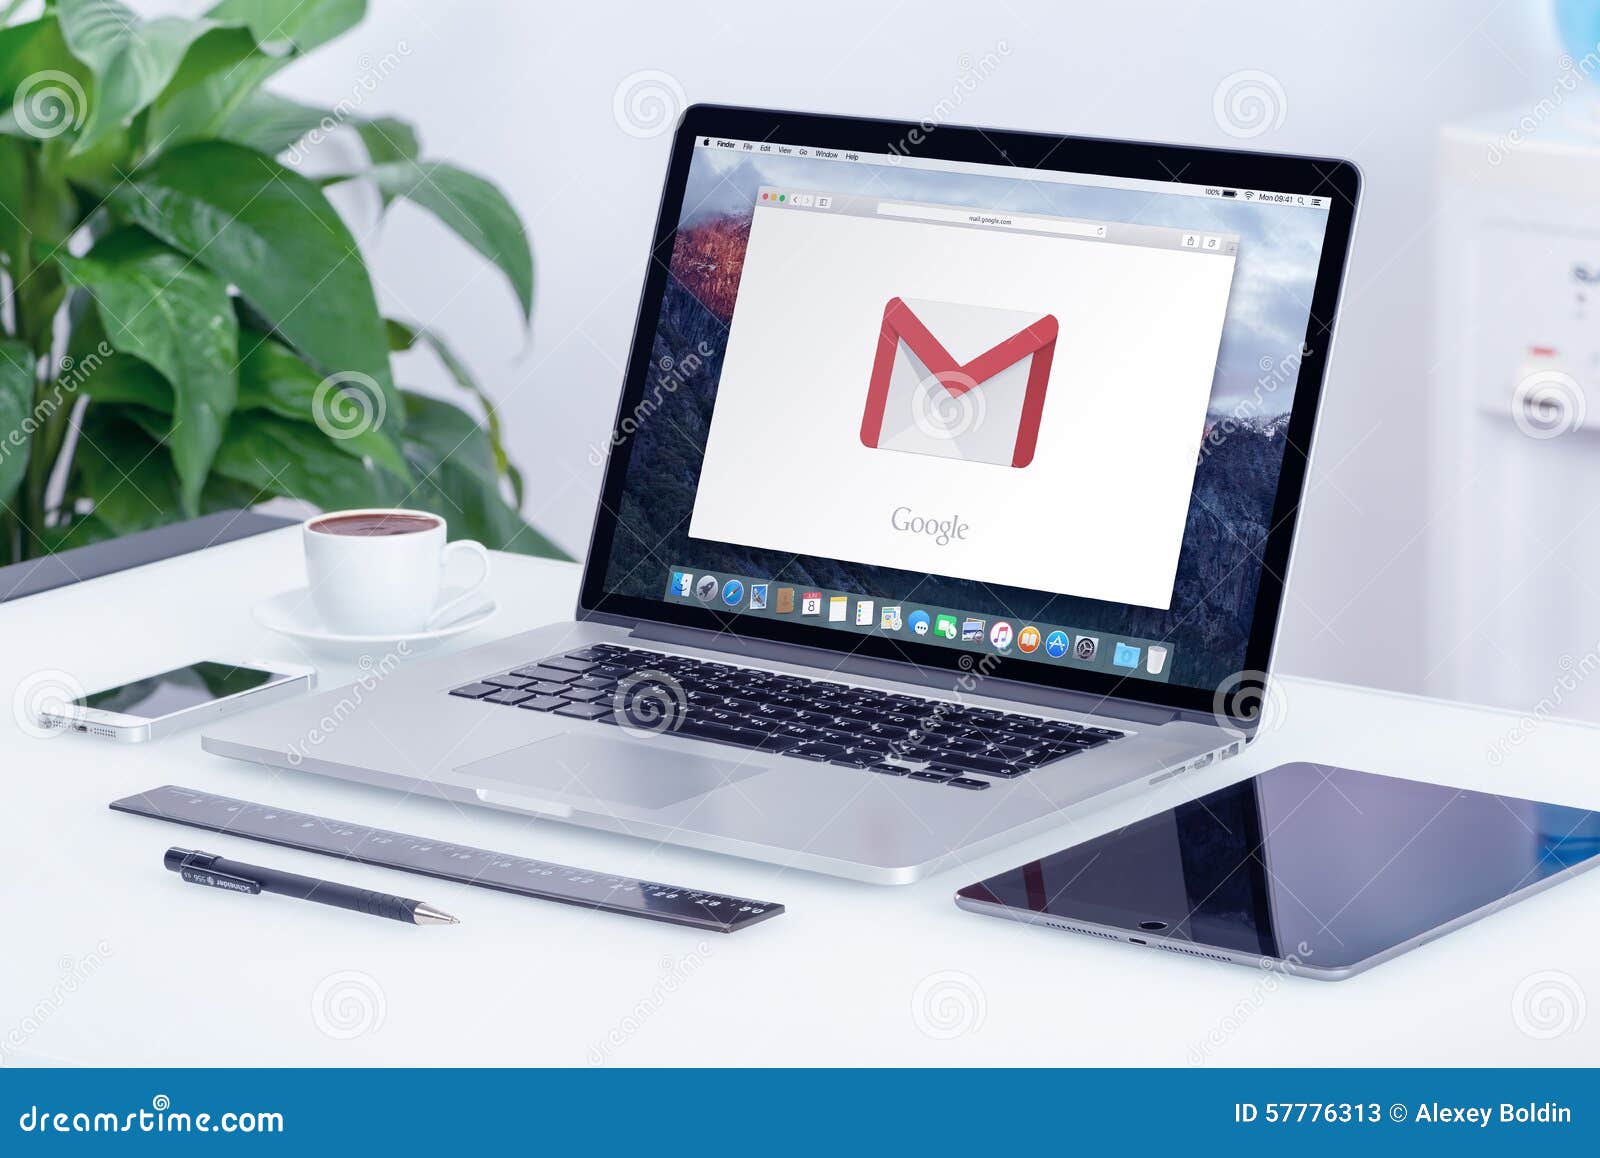 Gmail Desktop App Mac Free